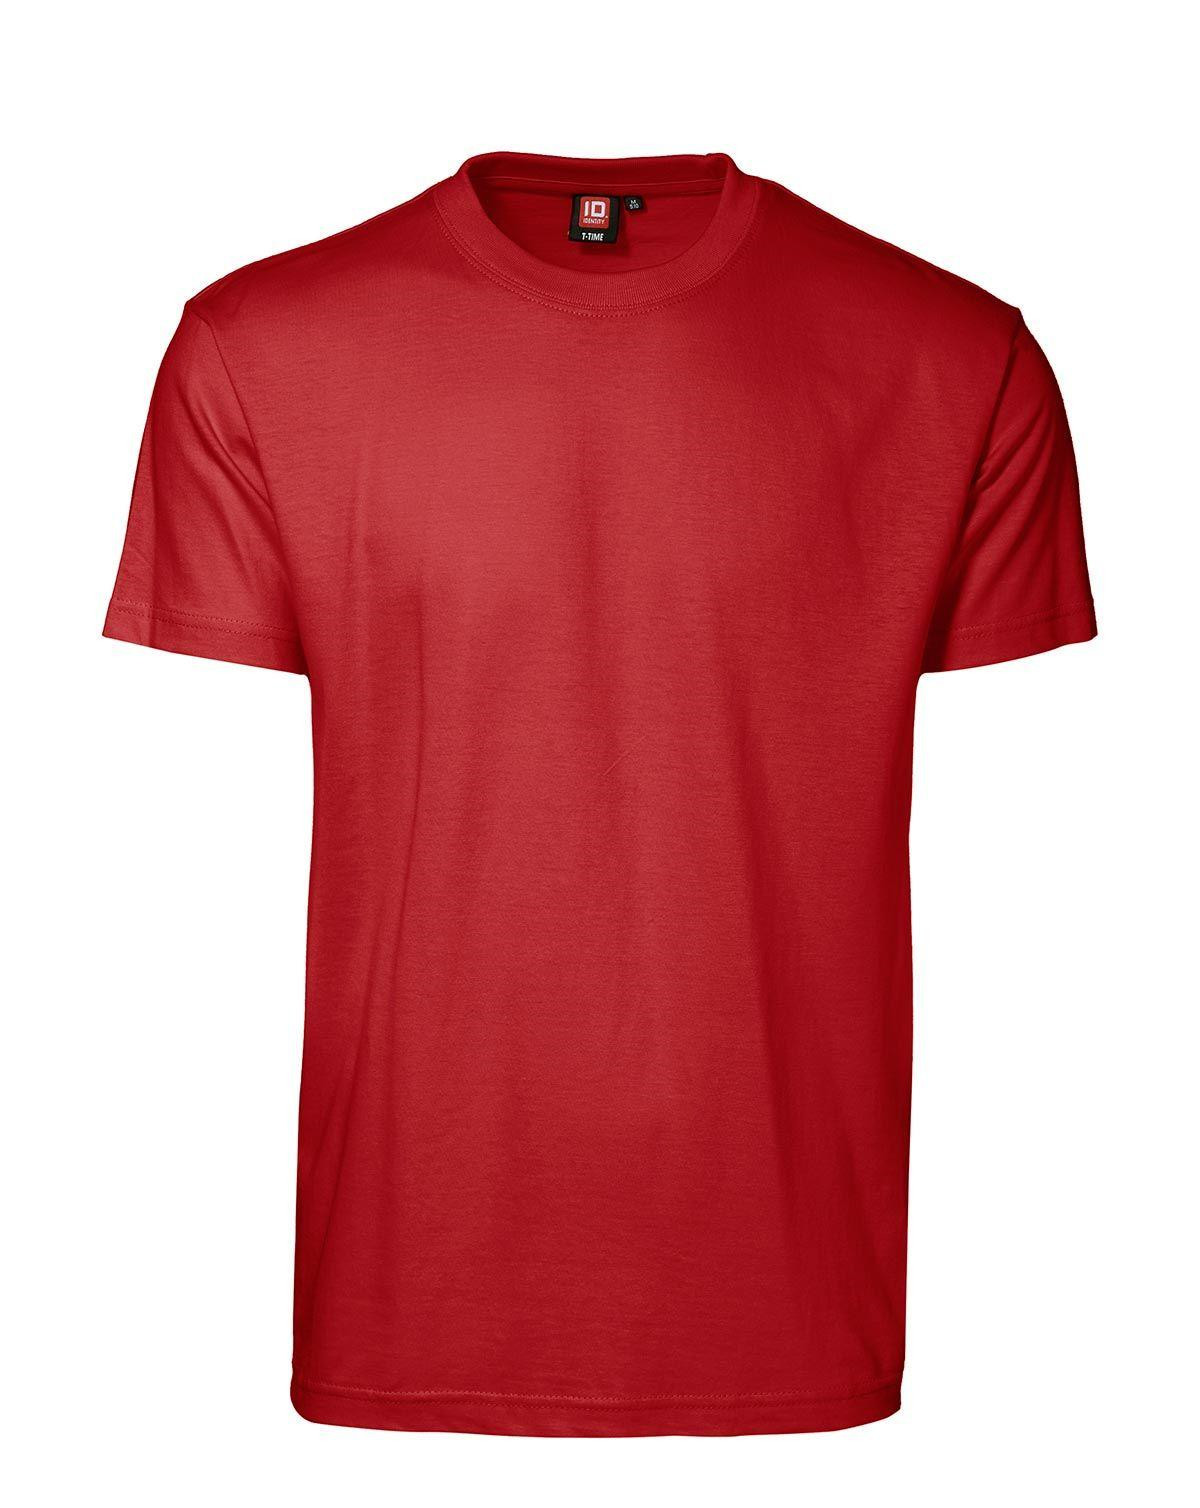 Billede af ID T-Time T-shirt, rund hals (Rød, 4XL) hos Army Star